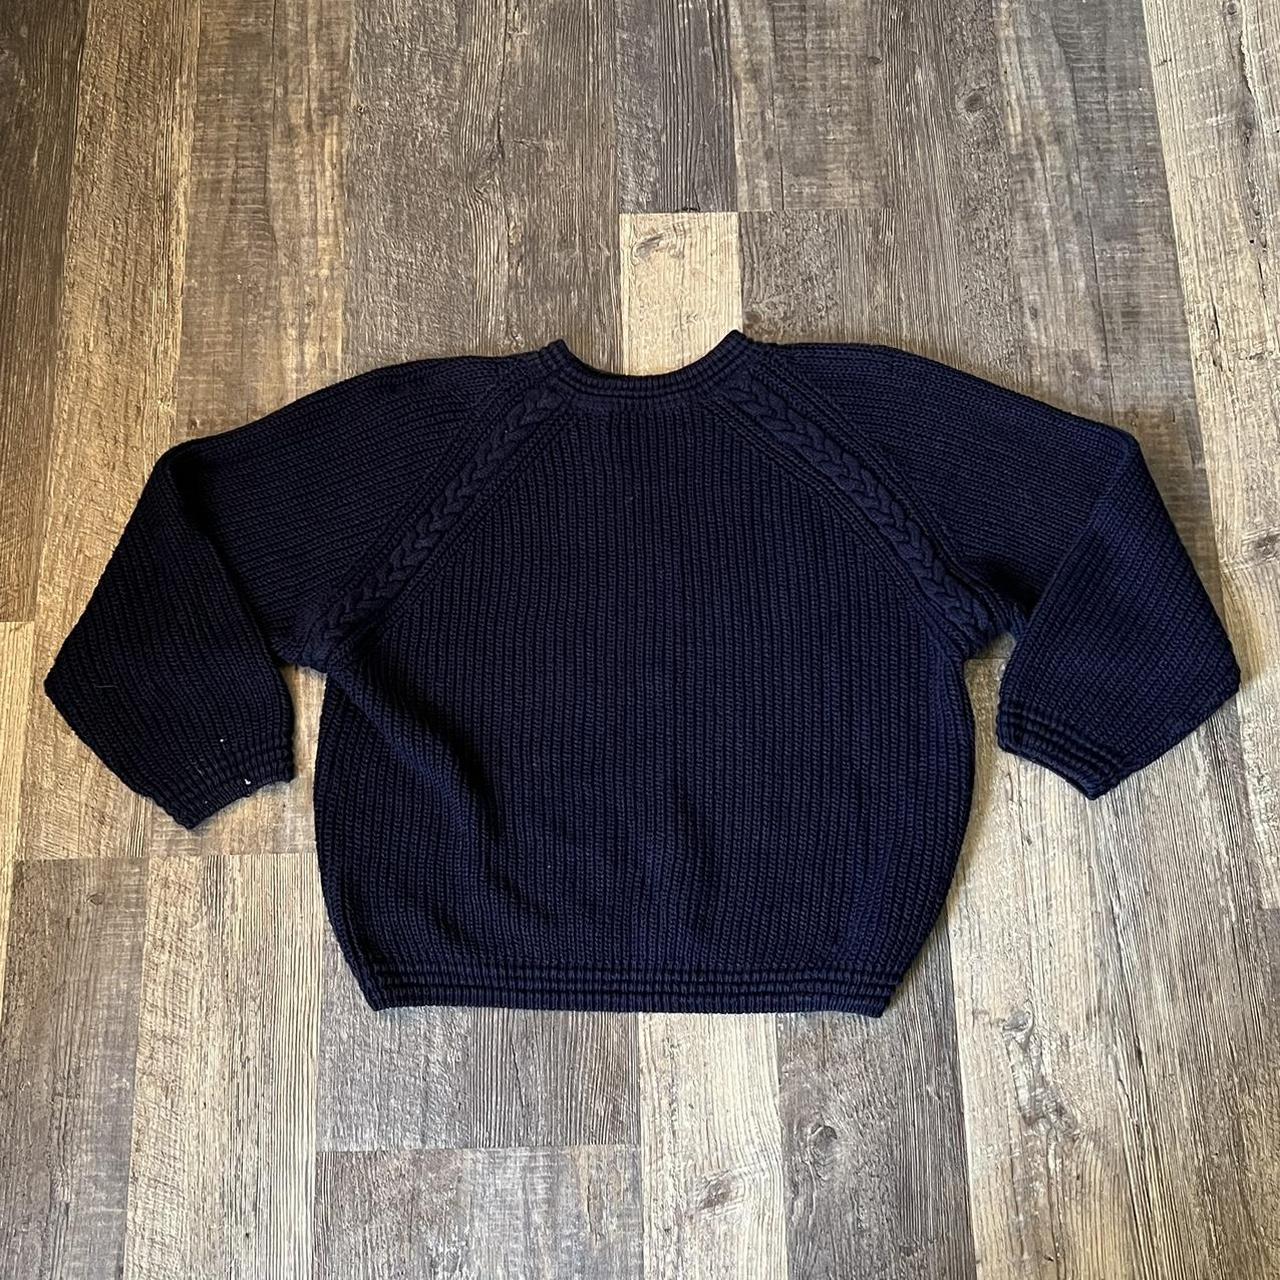 Vintage Basic Knit Sweater Size M but fits a little... - Depop